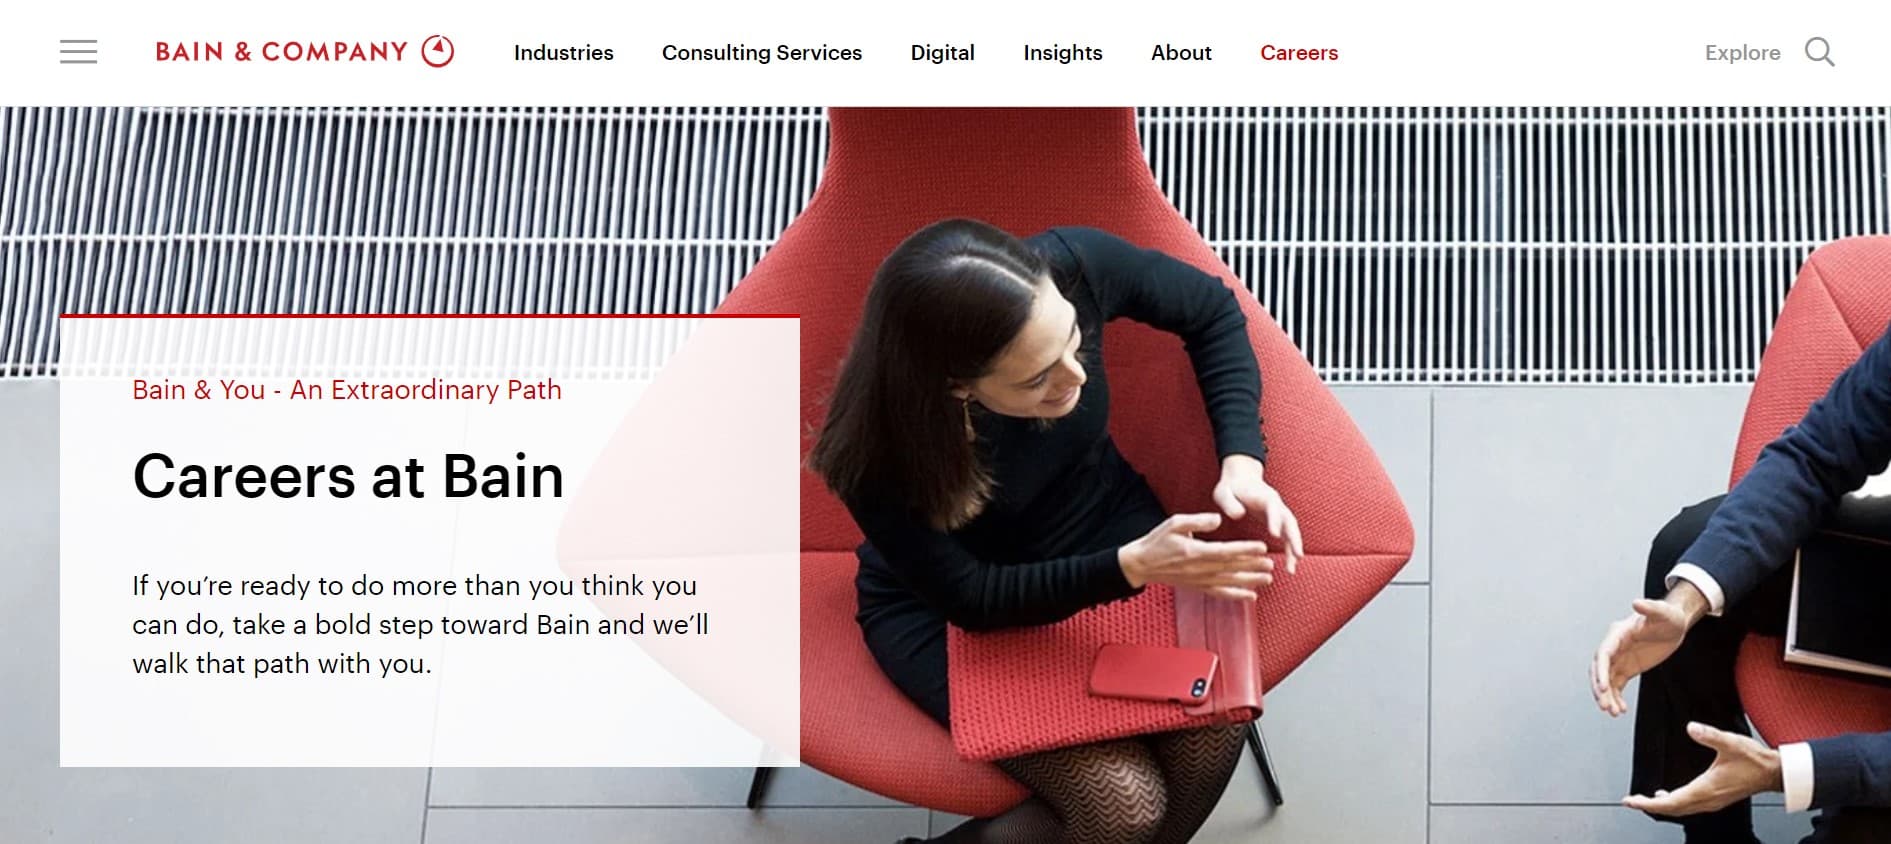 Join Bain & Company - start your career at Bain & Company now